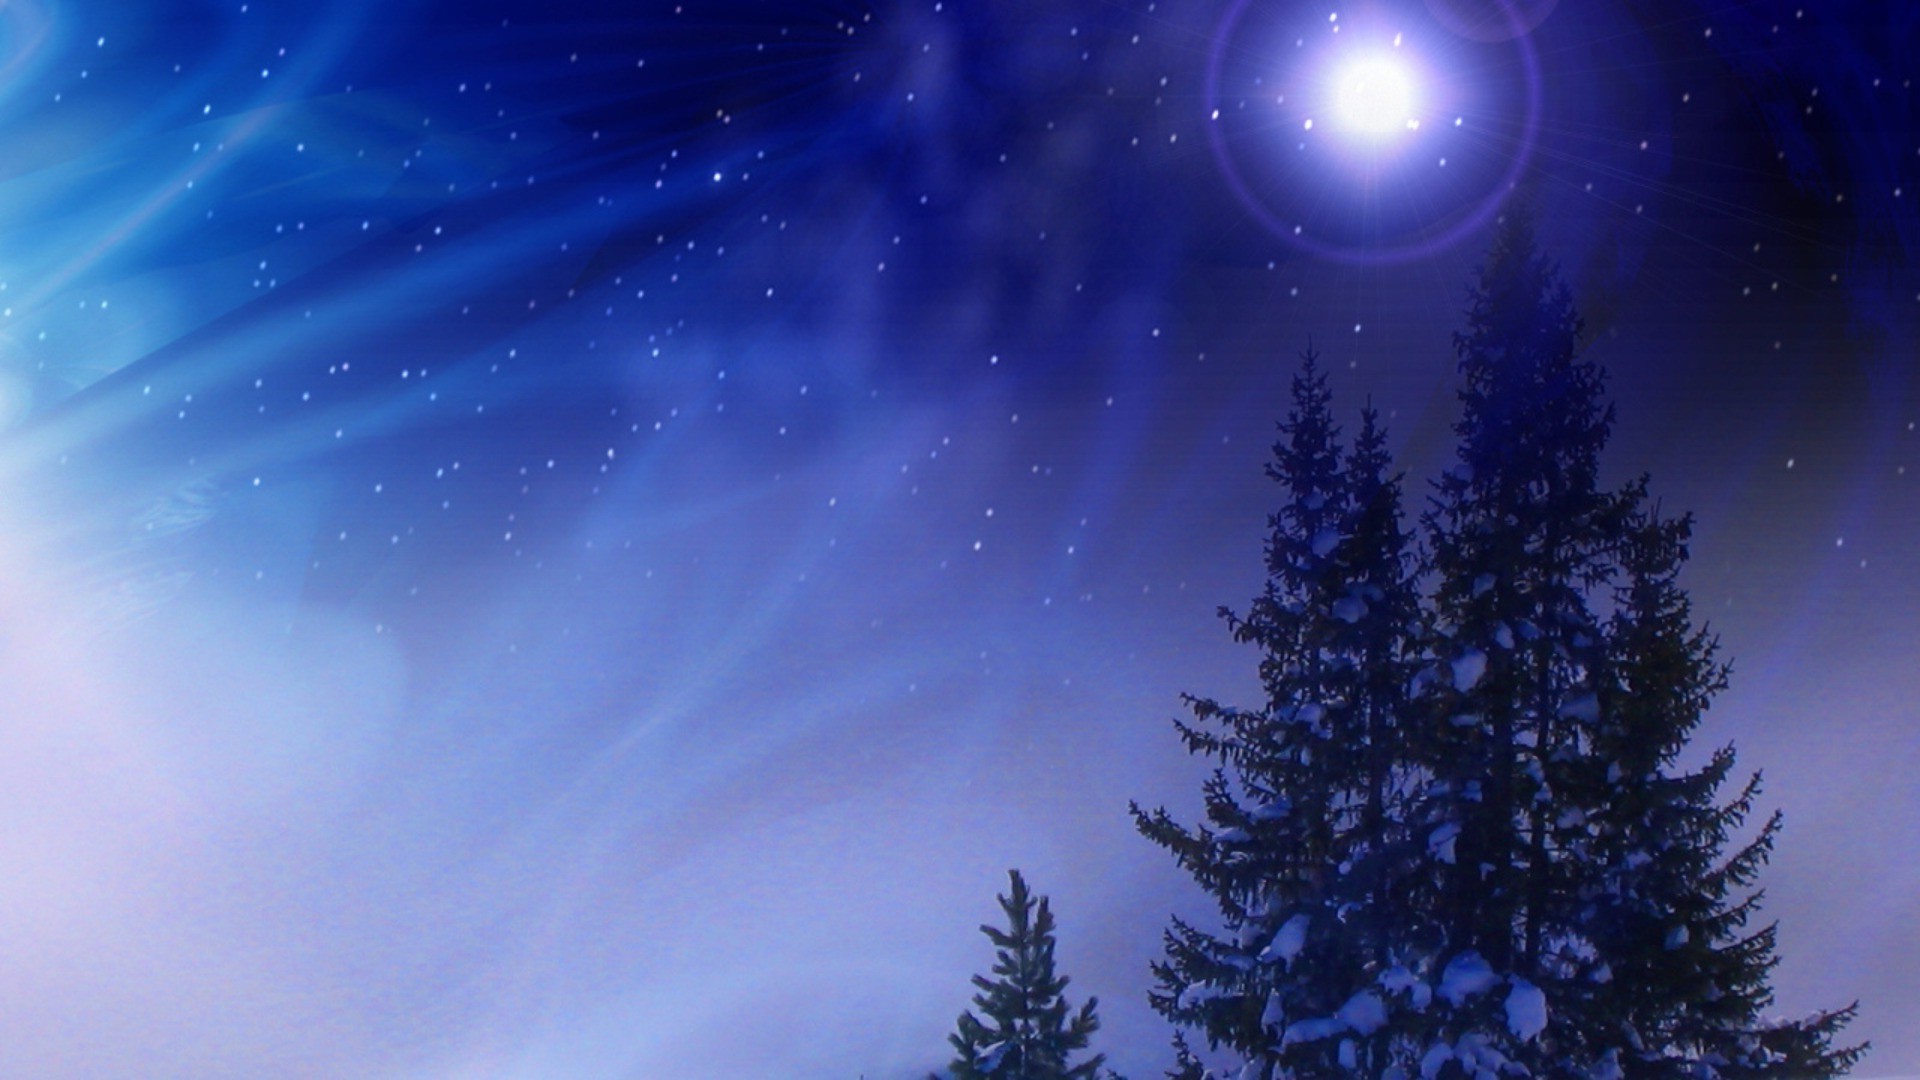 night evening twilight moon sky nature winter astronomy space christmas snow bright sun galaxy illuminated light cold outdoors